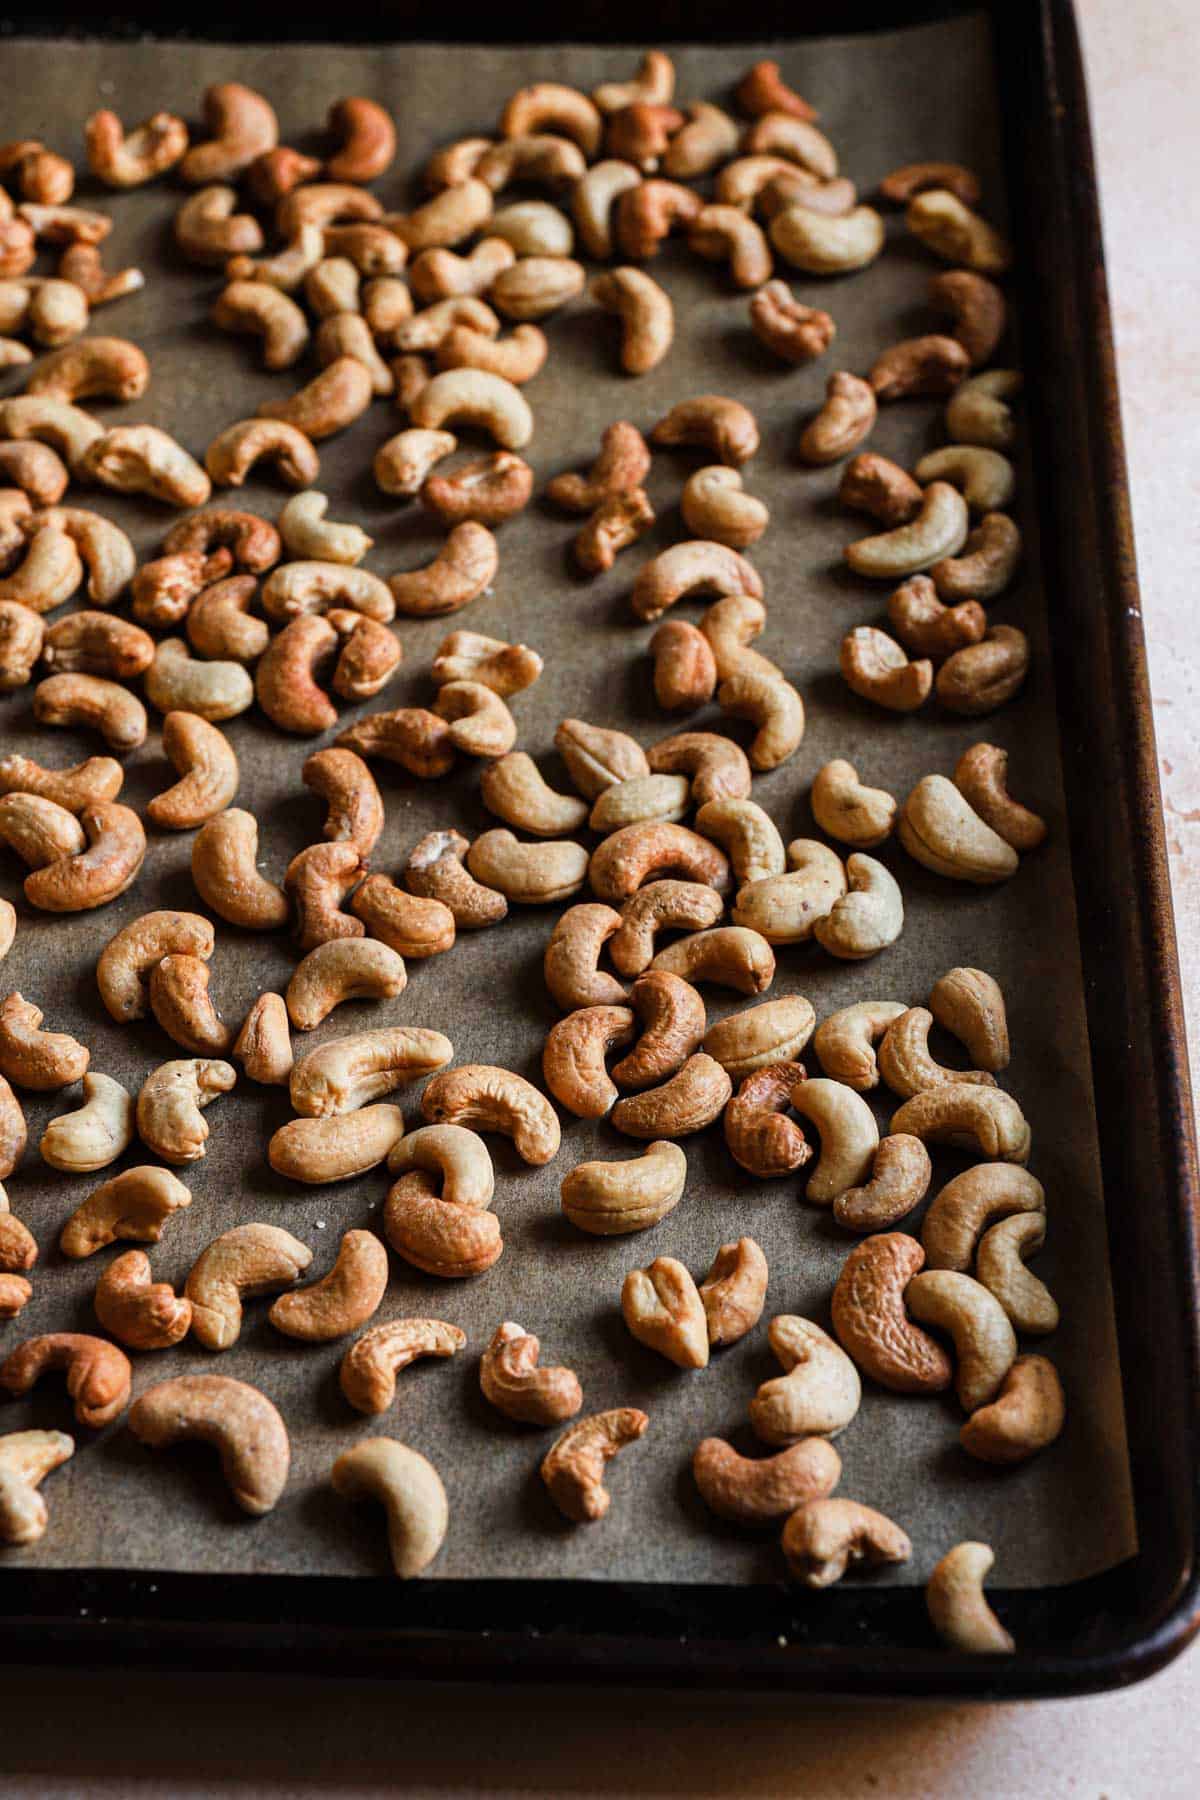 Roasted cashews in a baking pan